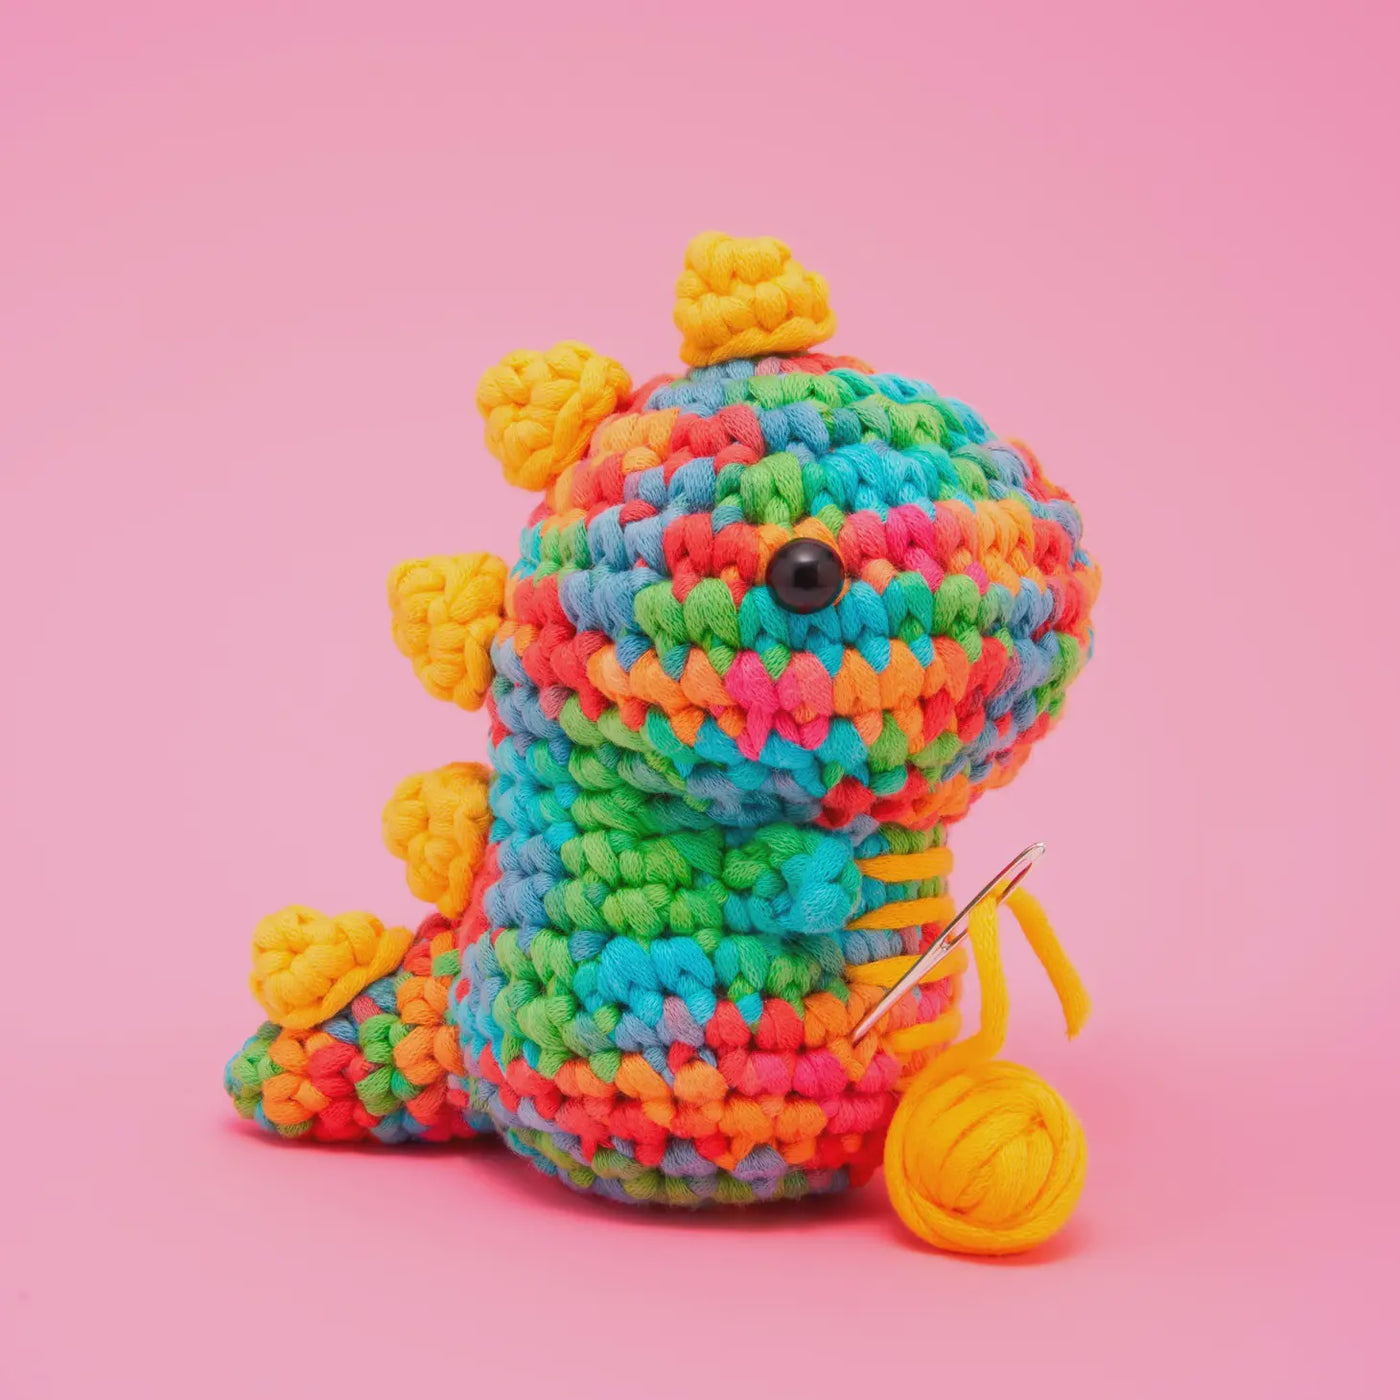 First wooble : r/crochet